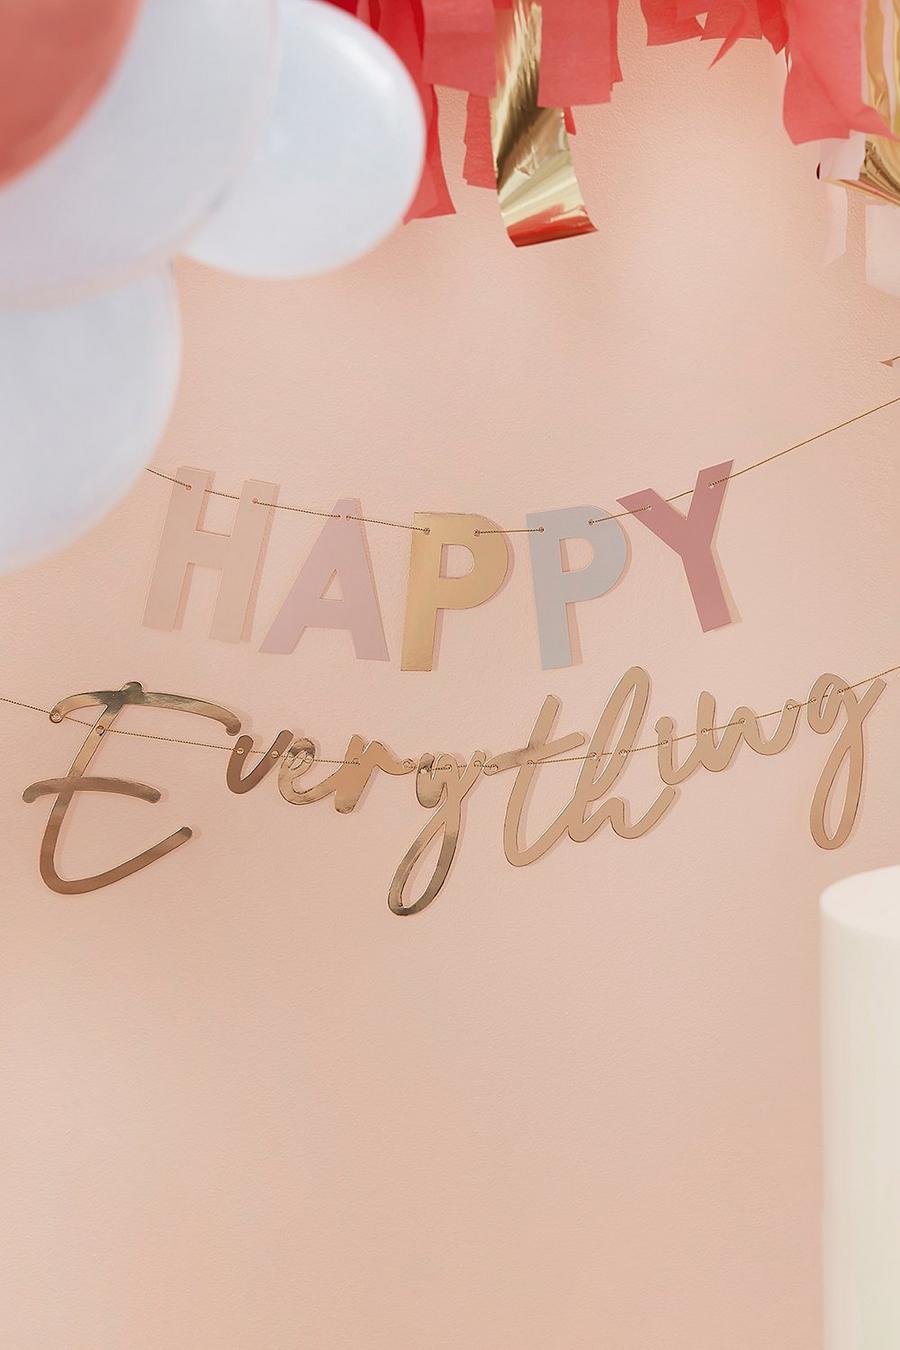 Festone laminato in oro Ginger Ray “Happy Everything” image number 1